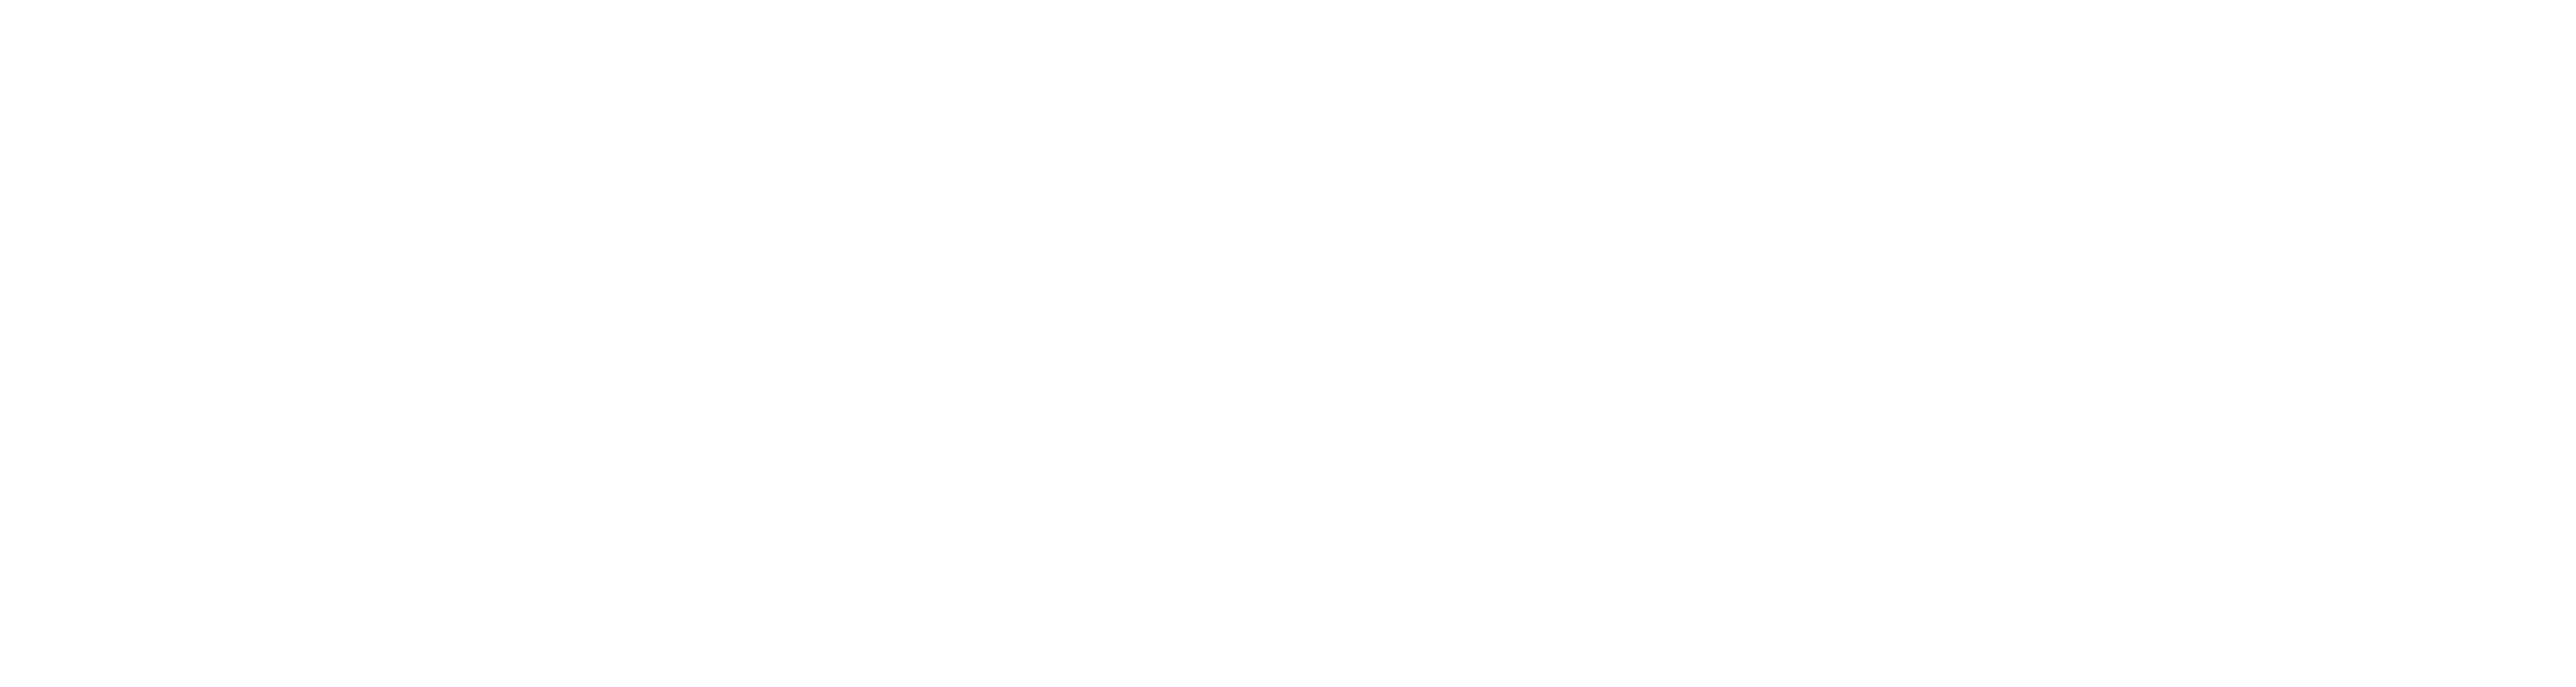 AEC Technology Blanco-02